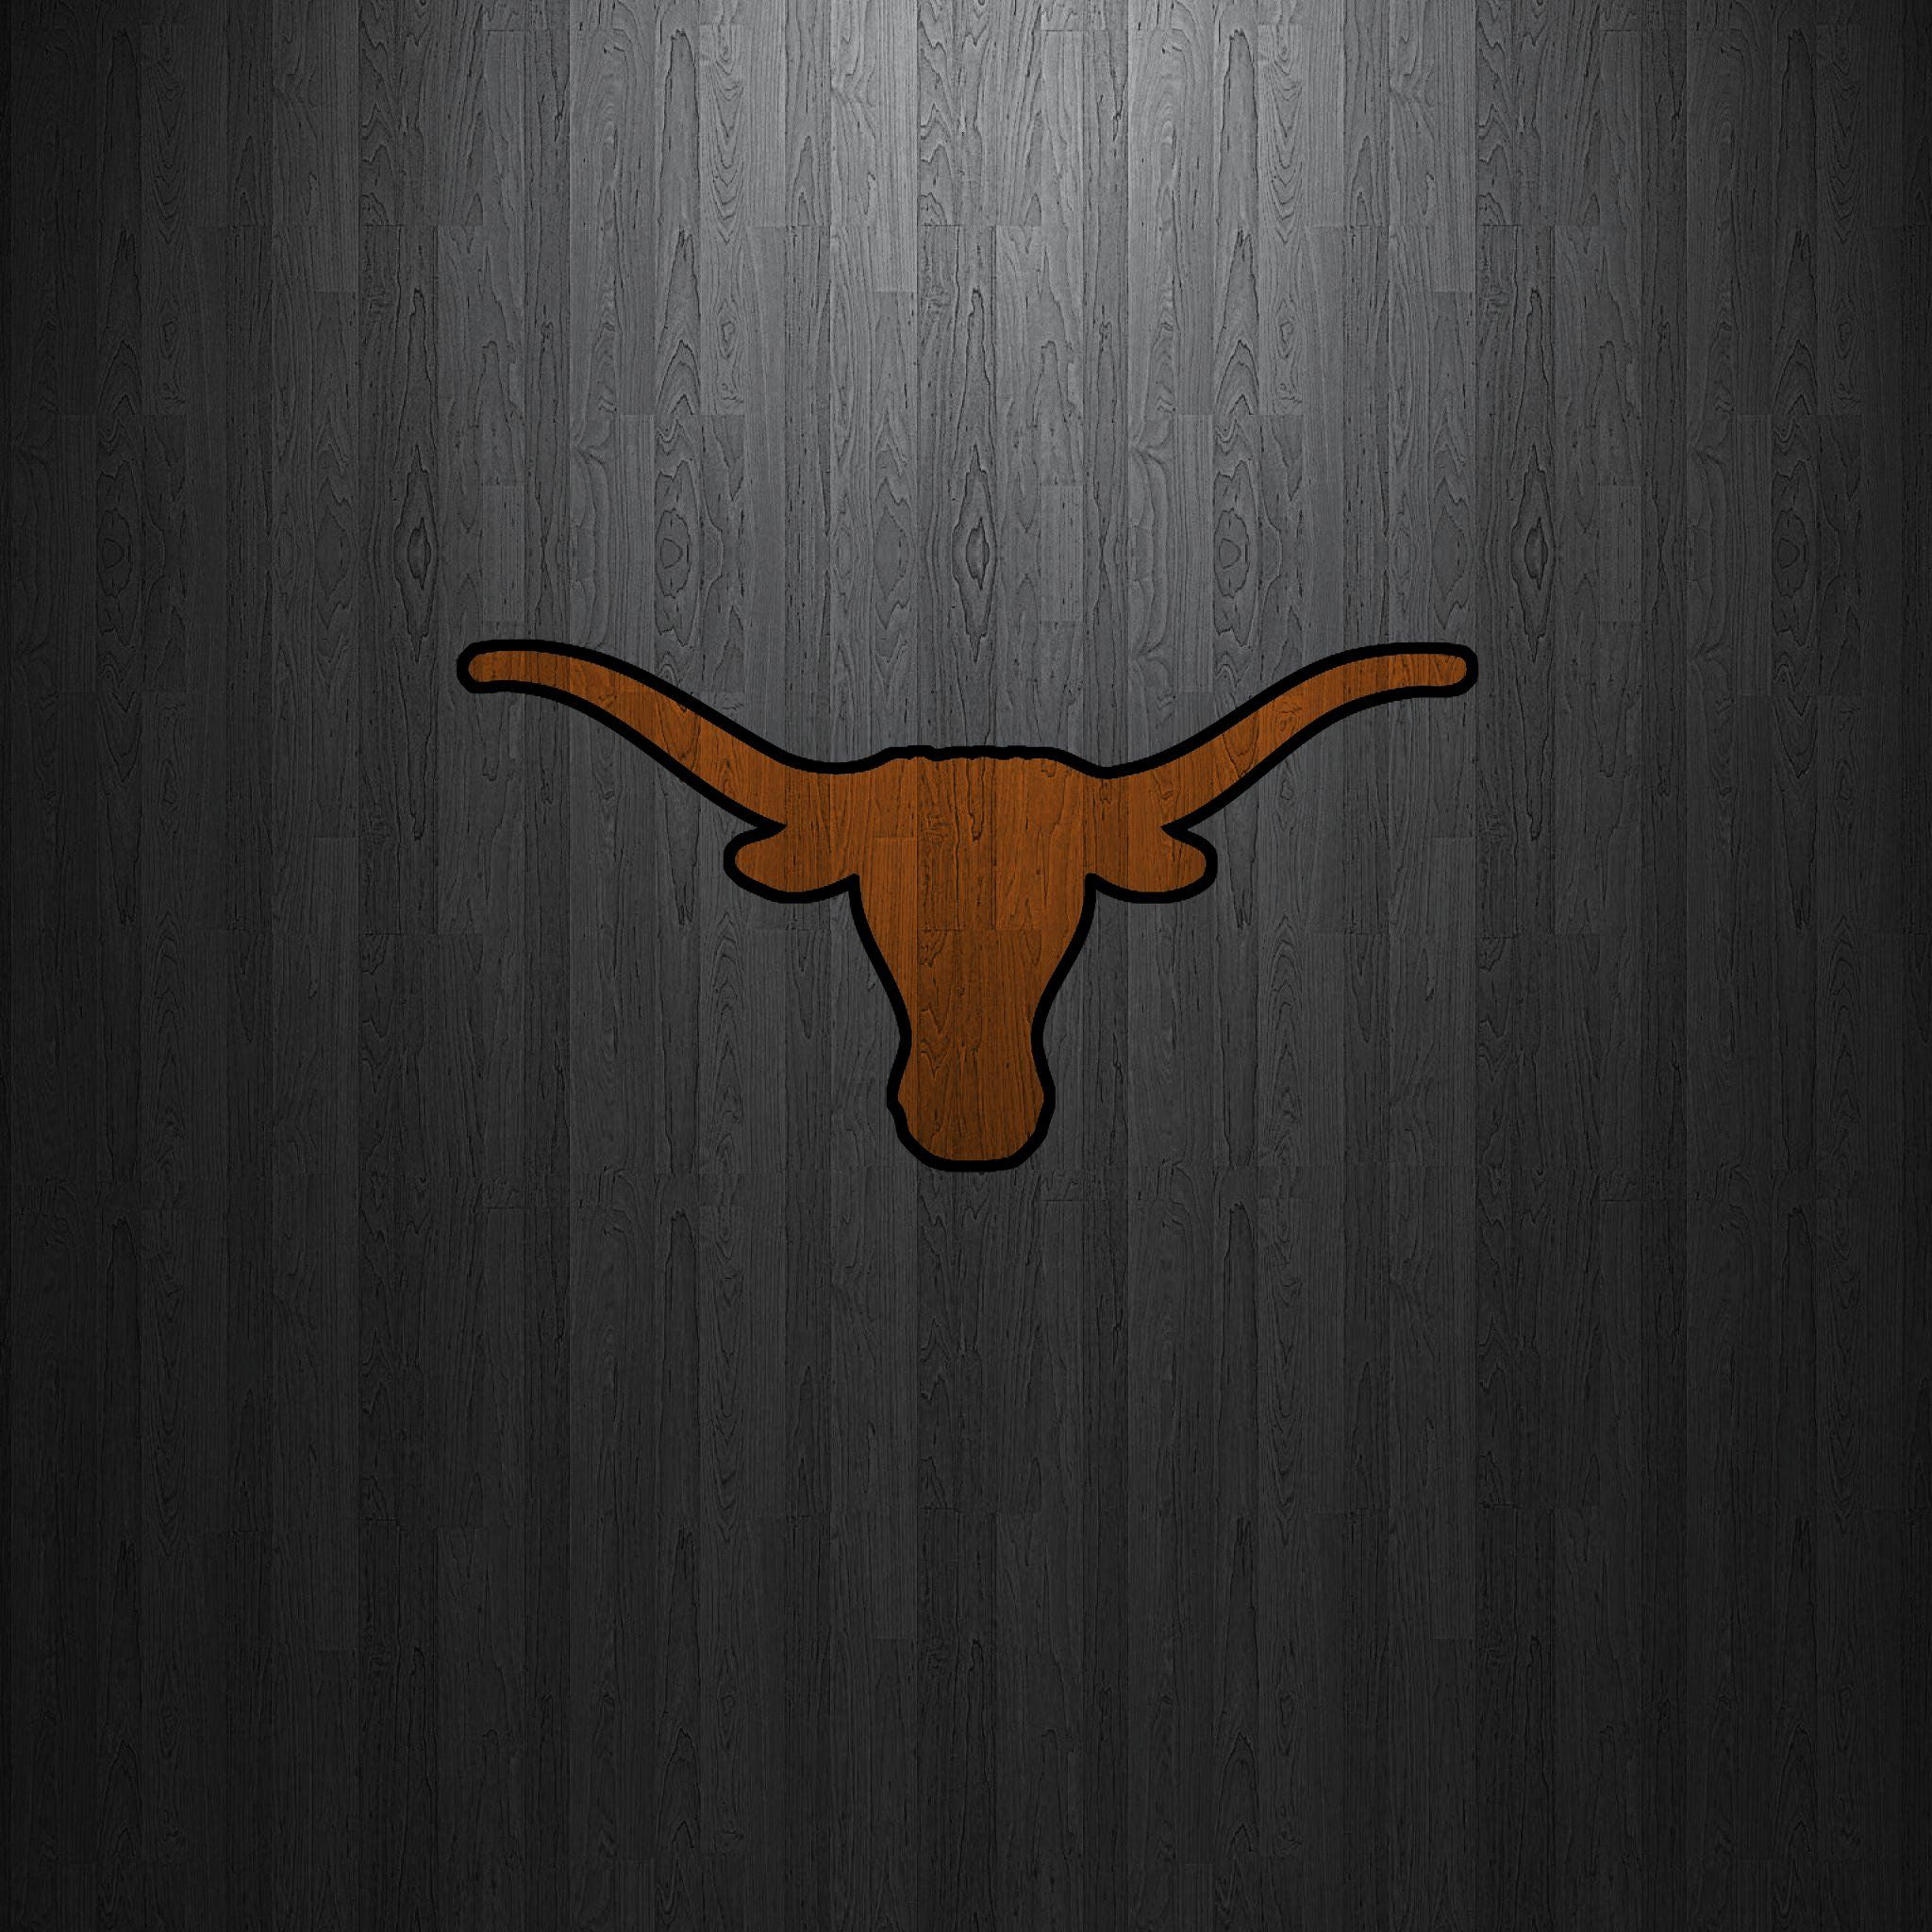 2048x2048 HD Texas Longhorns Football Backgrounds | Wallpapers, Backgrounds ... | Texas longhorns logo, Texas longhorns football, Longhor